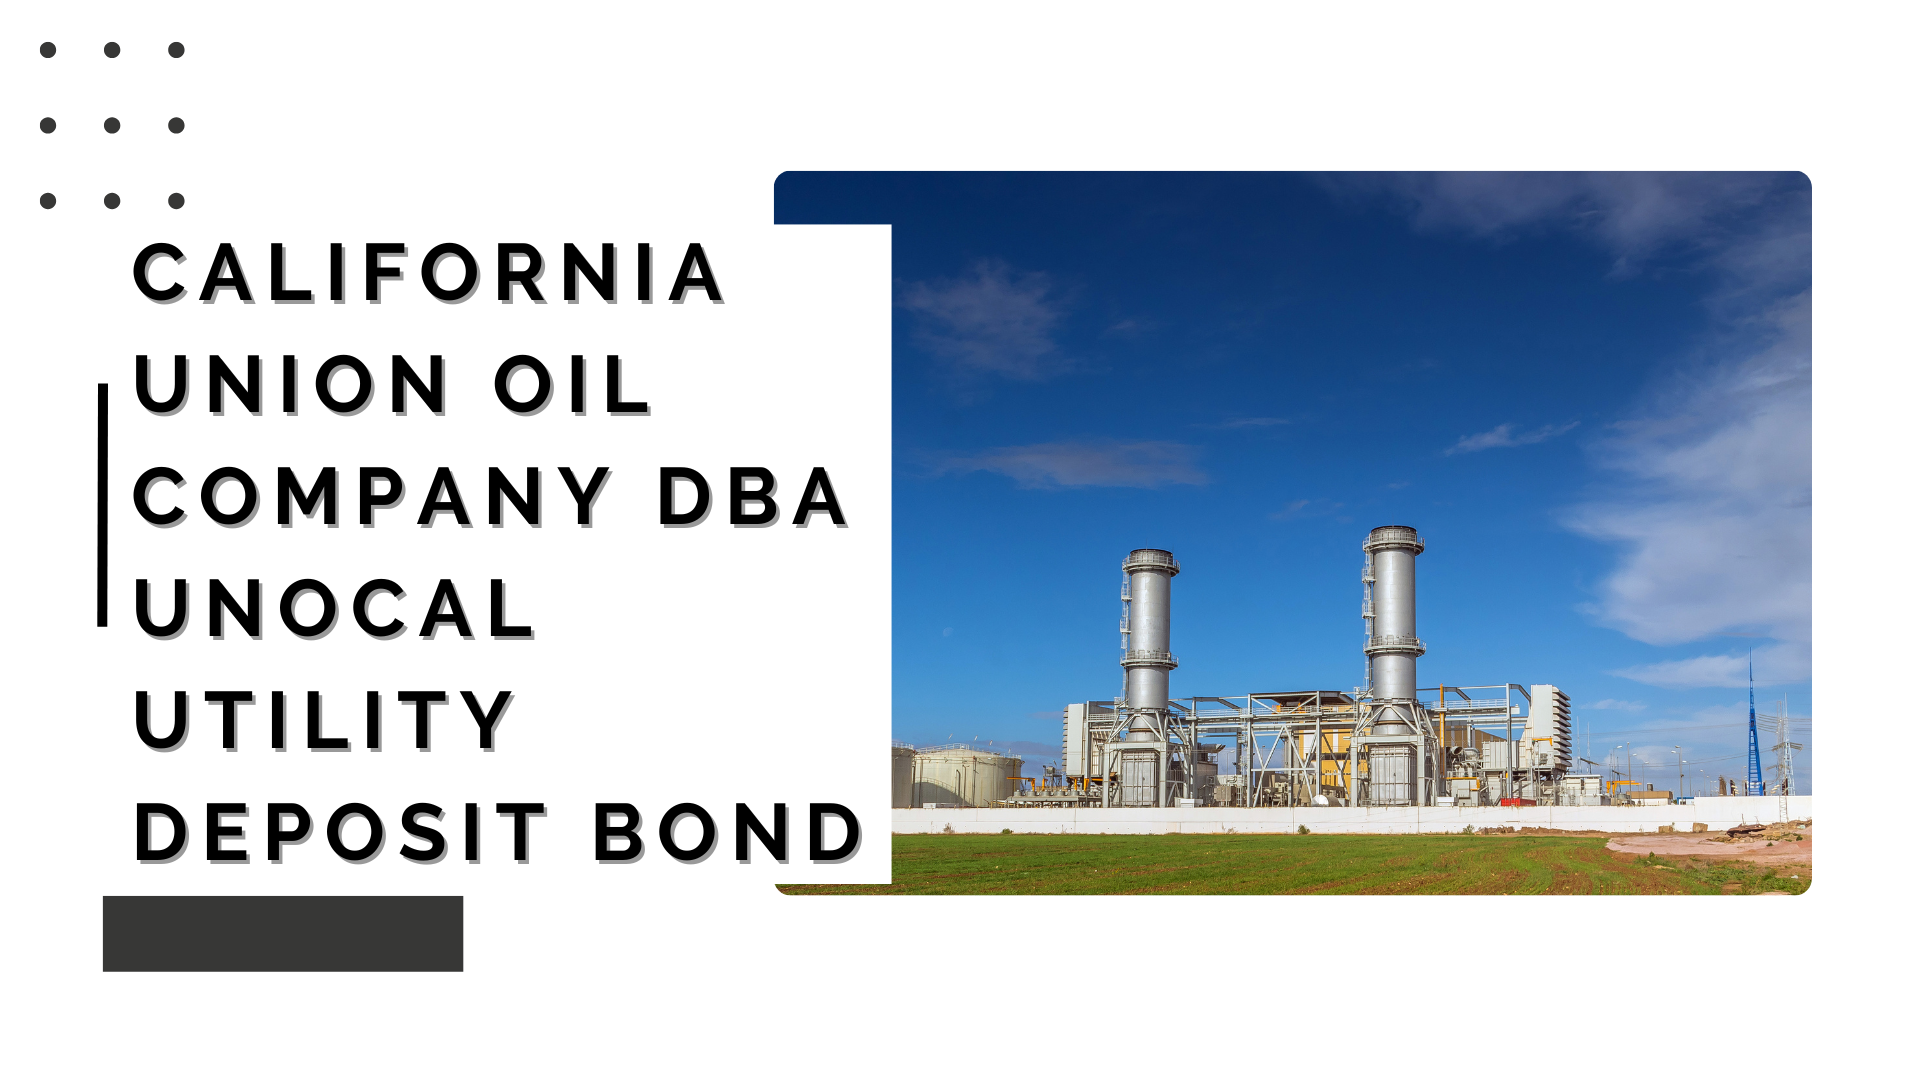 Surety Bond-California Union Oil Company dba Unocal Utility Deposit Bond